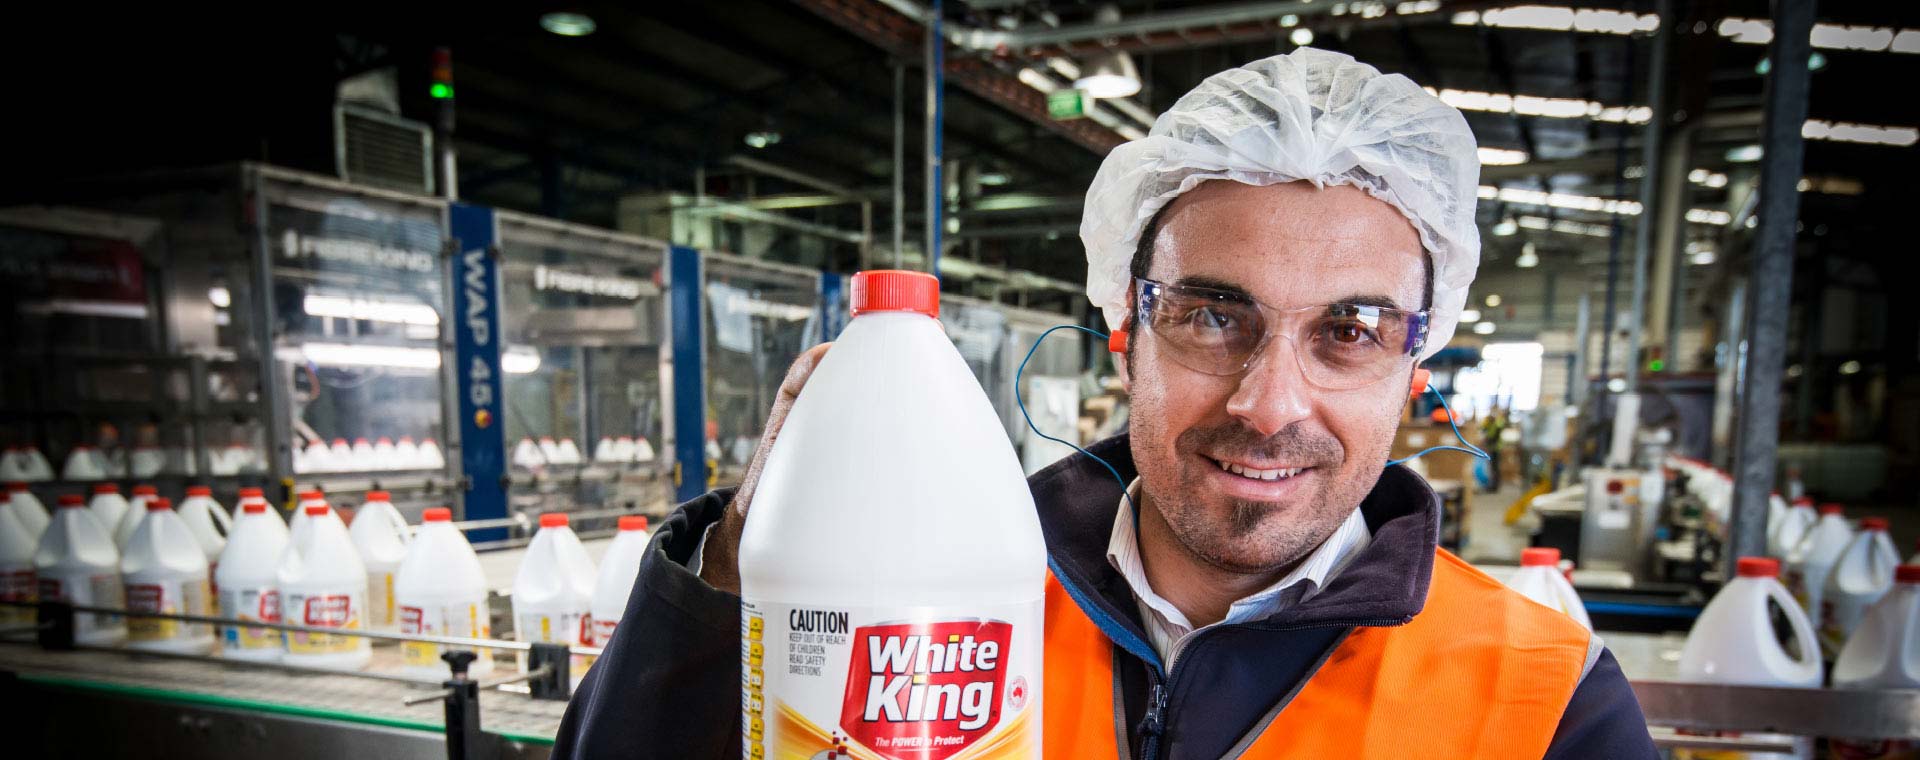 Pental worker holding up bottle of White King